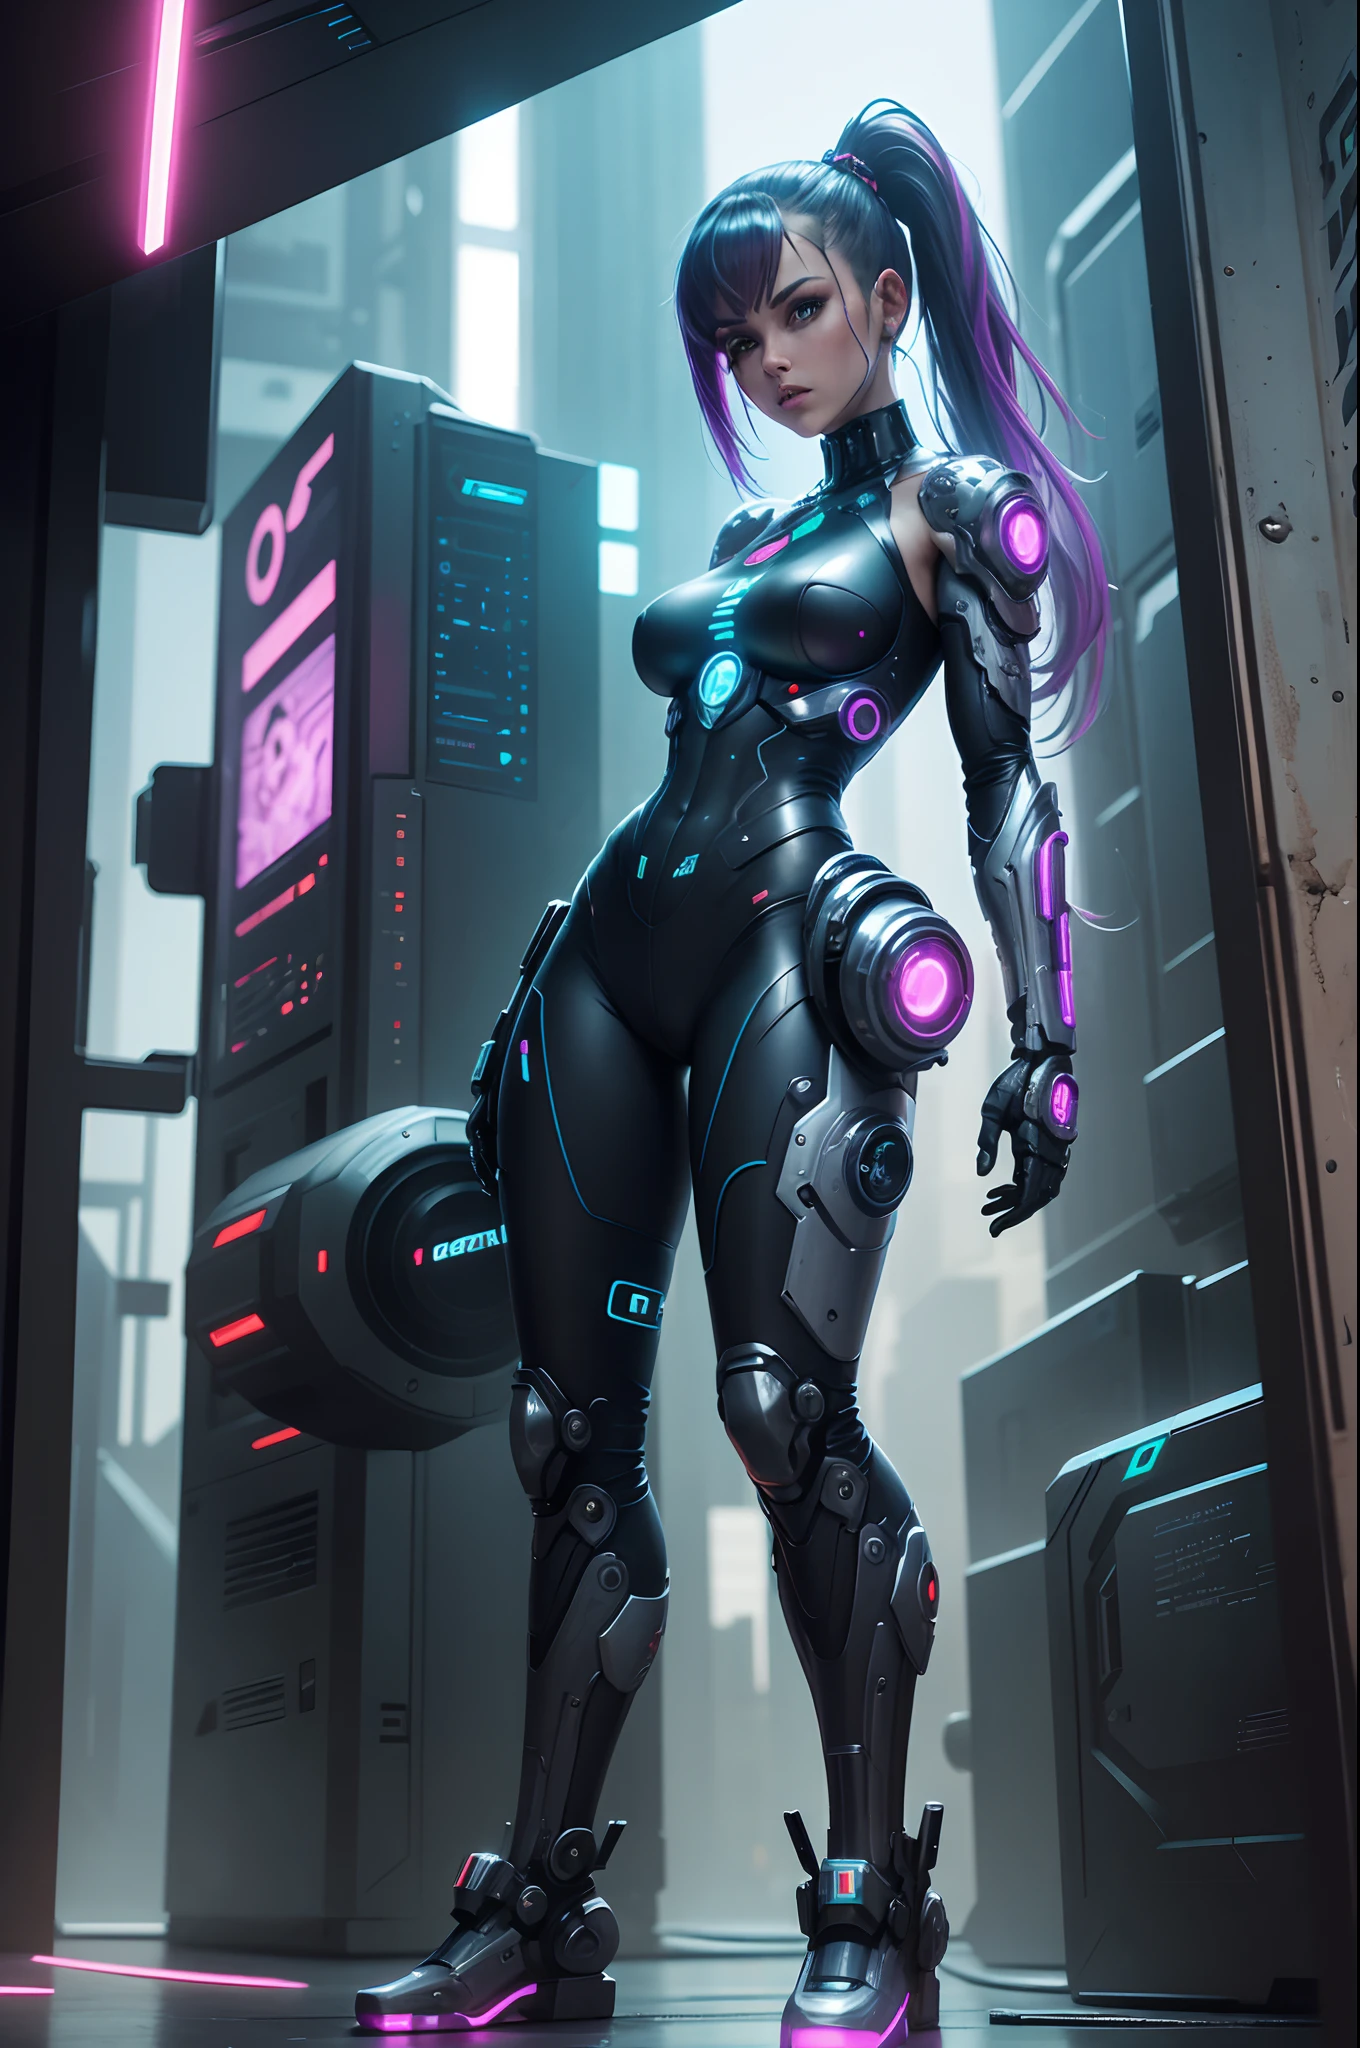 Garota cyberpunk, Cybernate, many cybernetic in the body, arms and legs, Too much cinematic detail